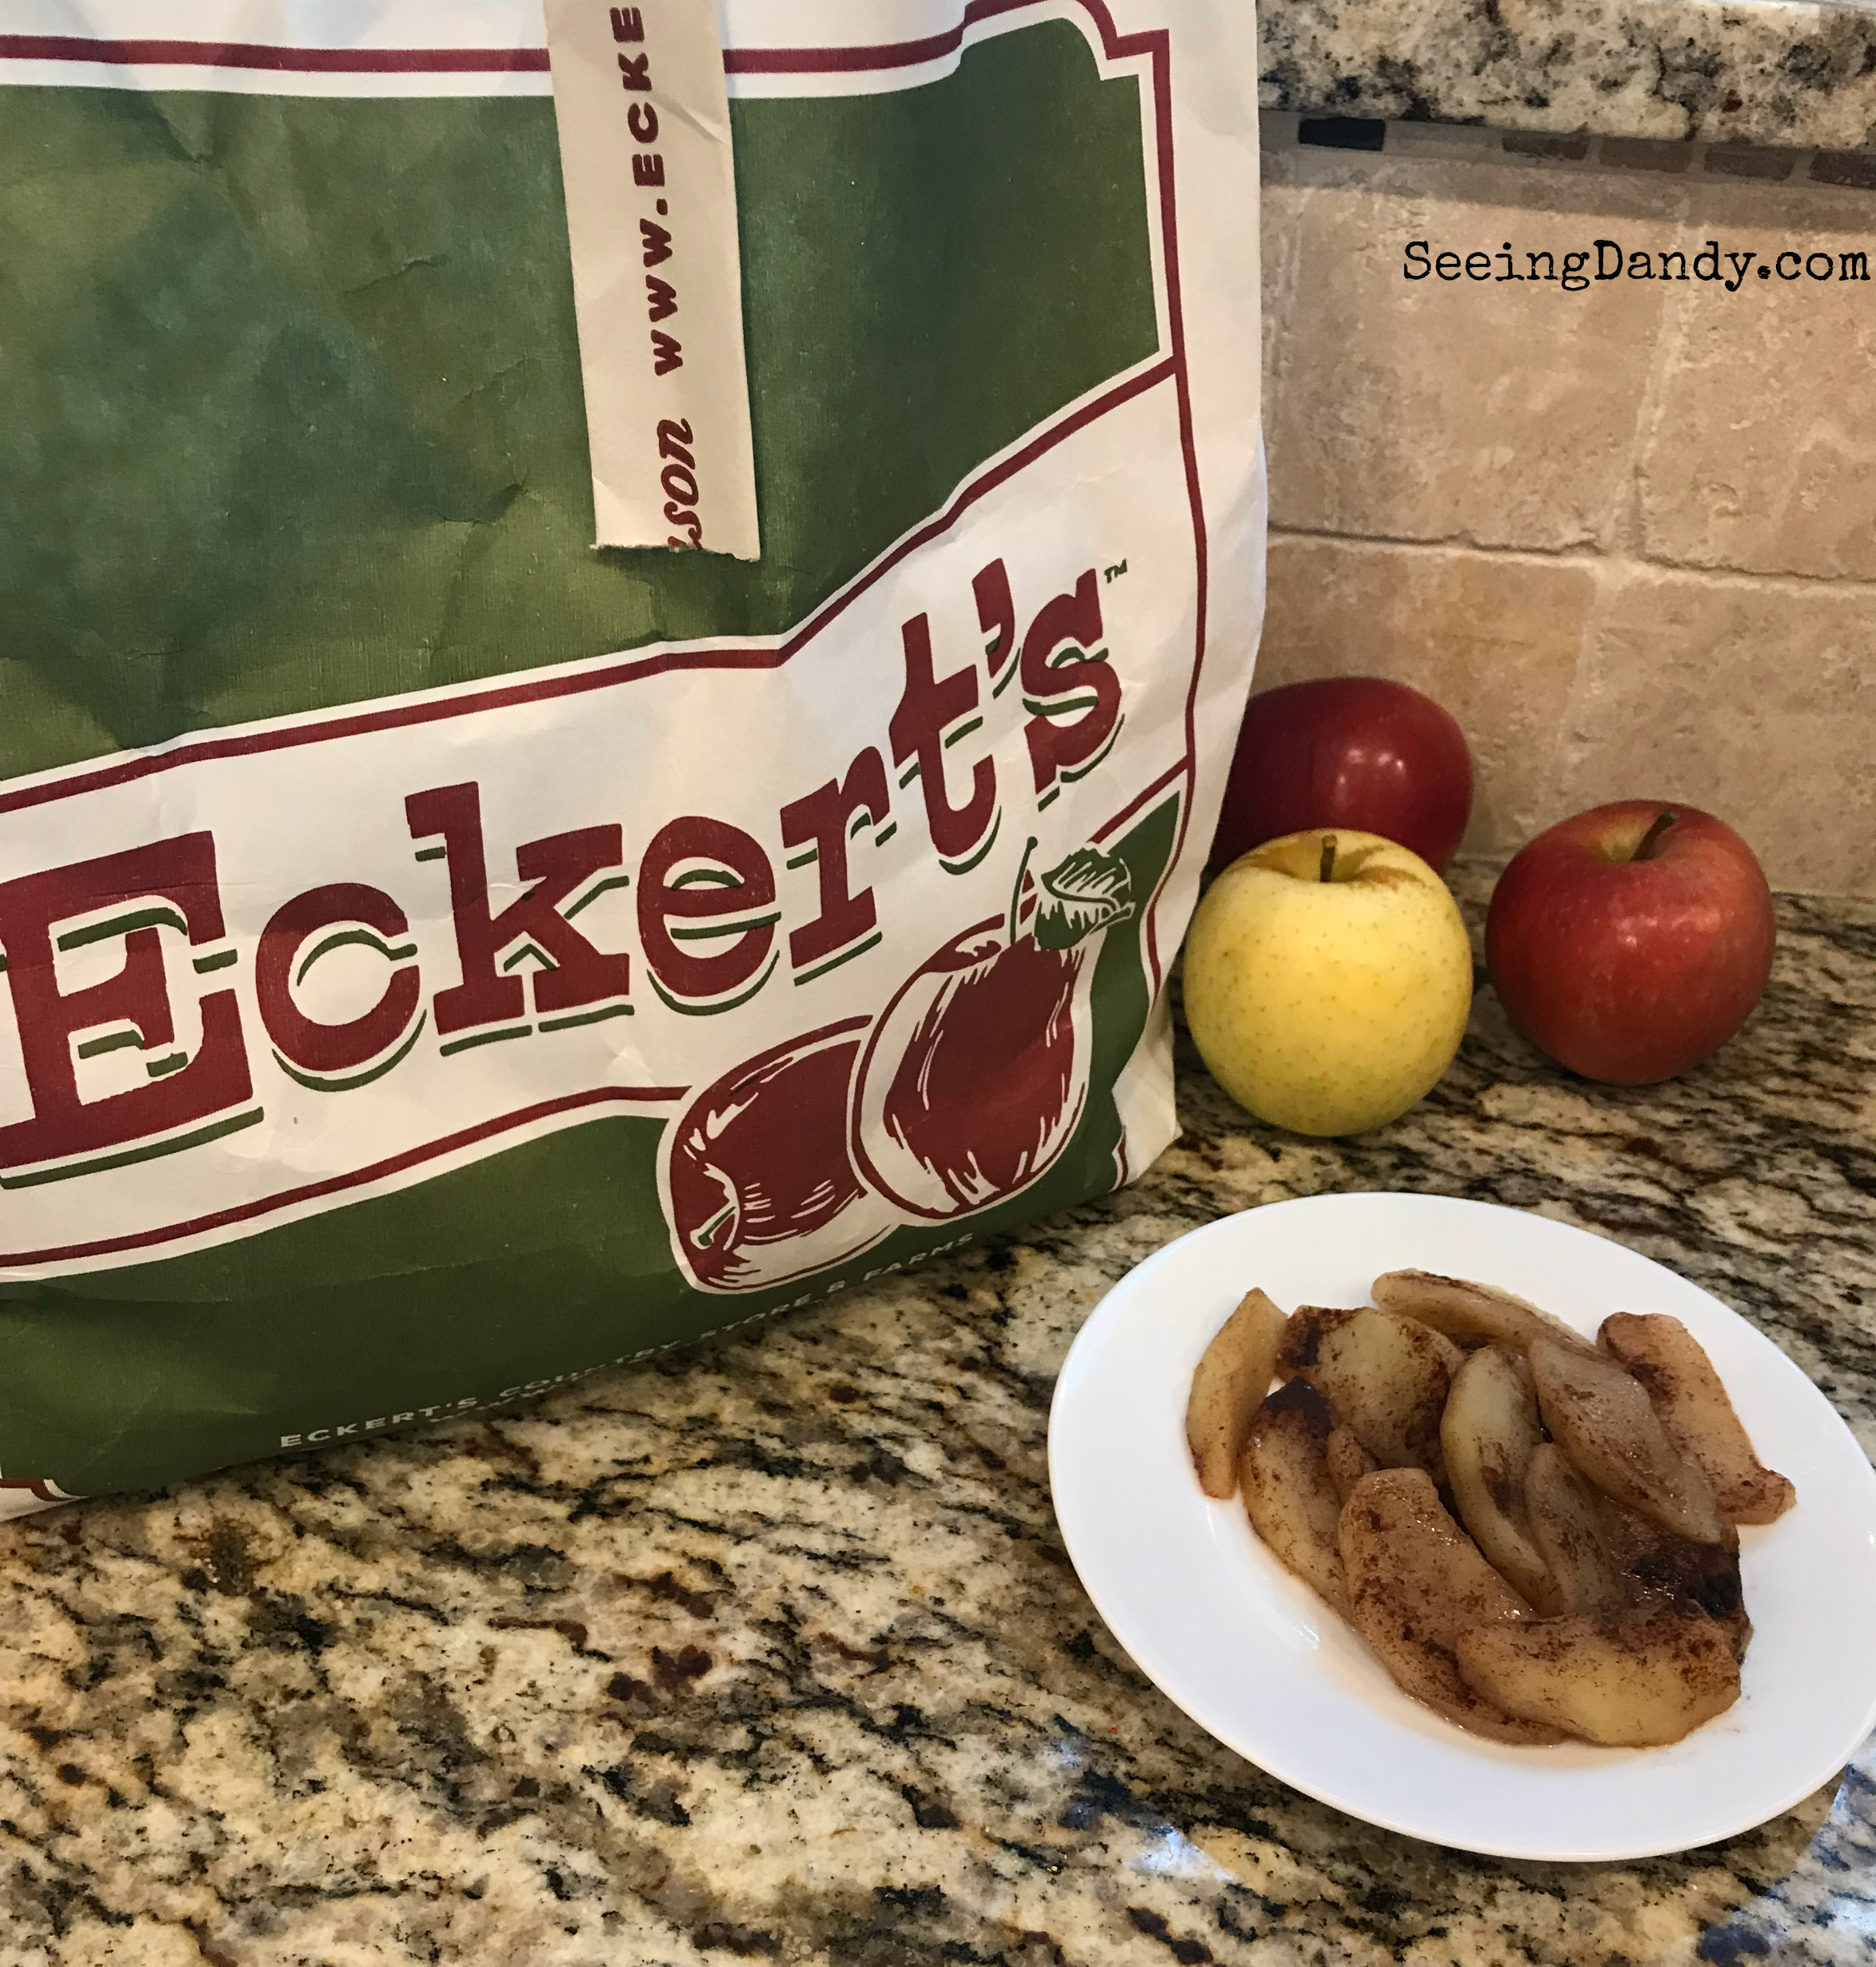 eckerts foil baked apples recipe